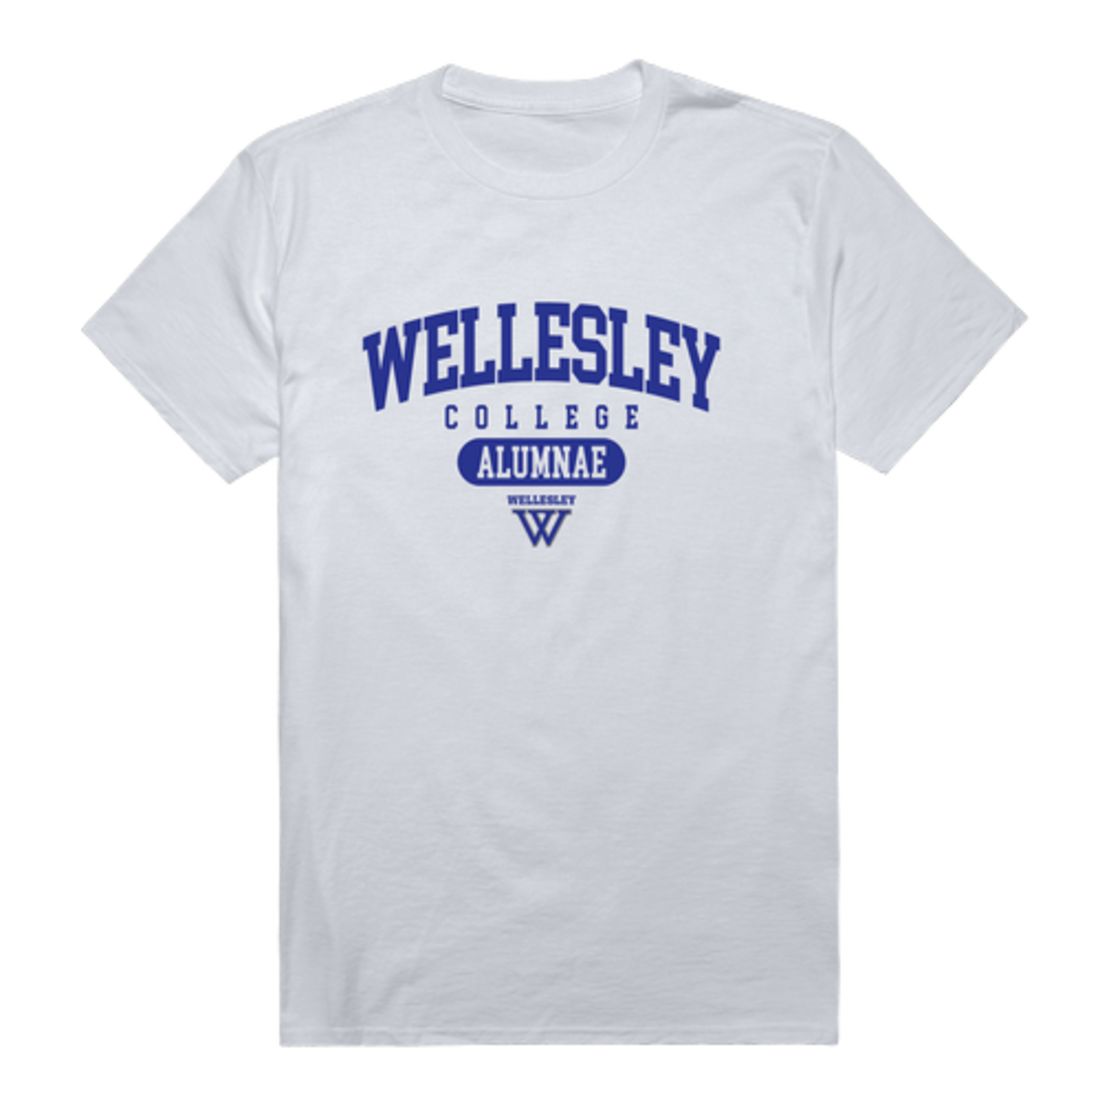 Wellesley College Blue Alumni T-Shirt Tee